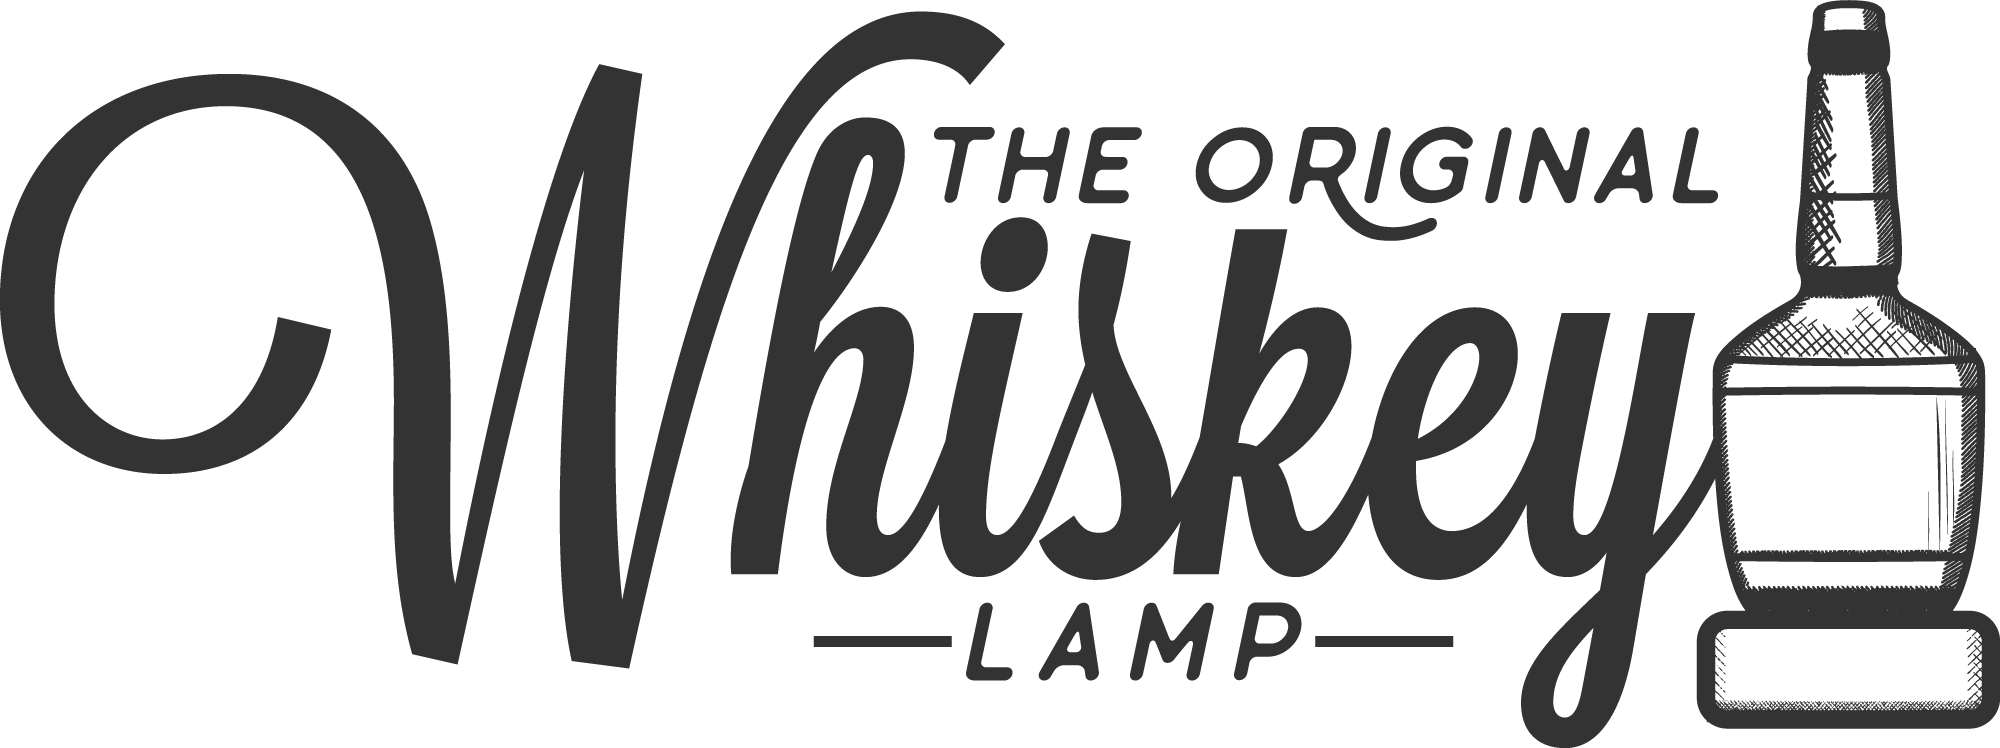 The Original Whiskey Lamp Logo